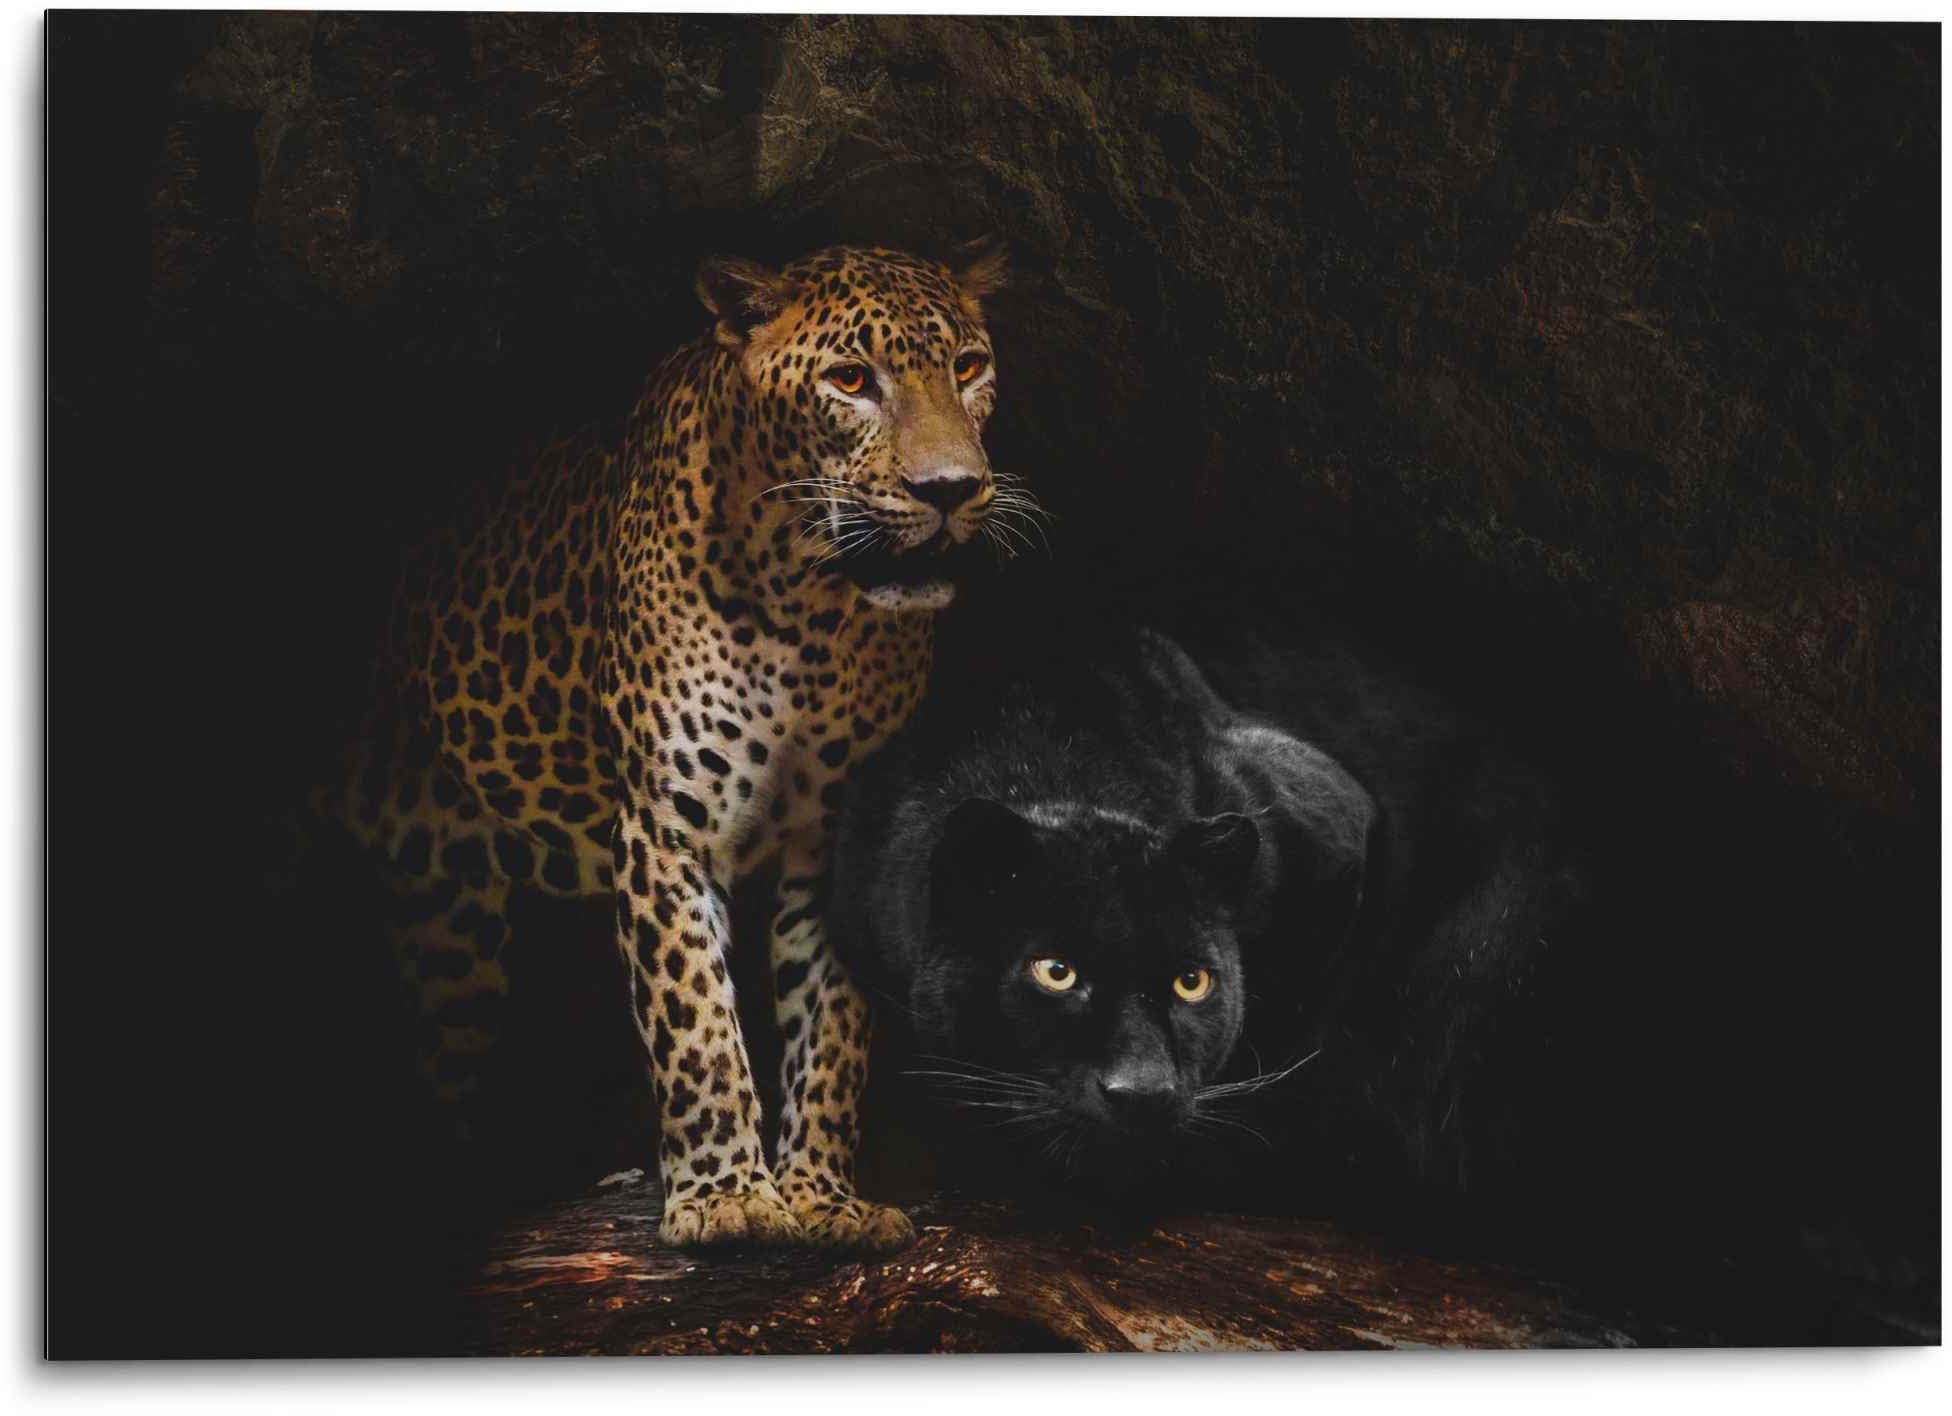 - Aluminium Panther Reinders! St) - Cougar Raubtiere Wandbild Katzen - Wildtiere (1 Wandbild Höhle,